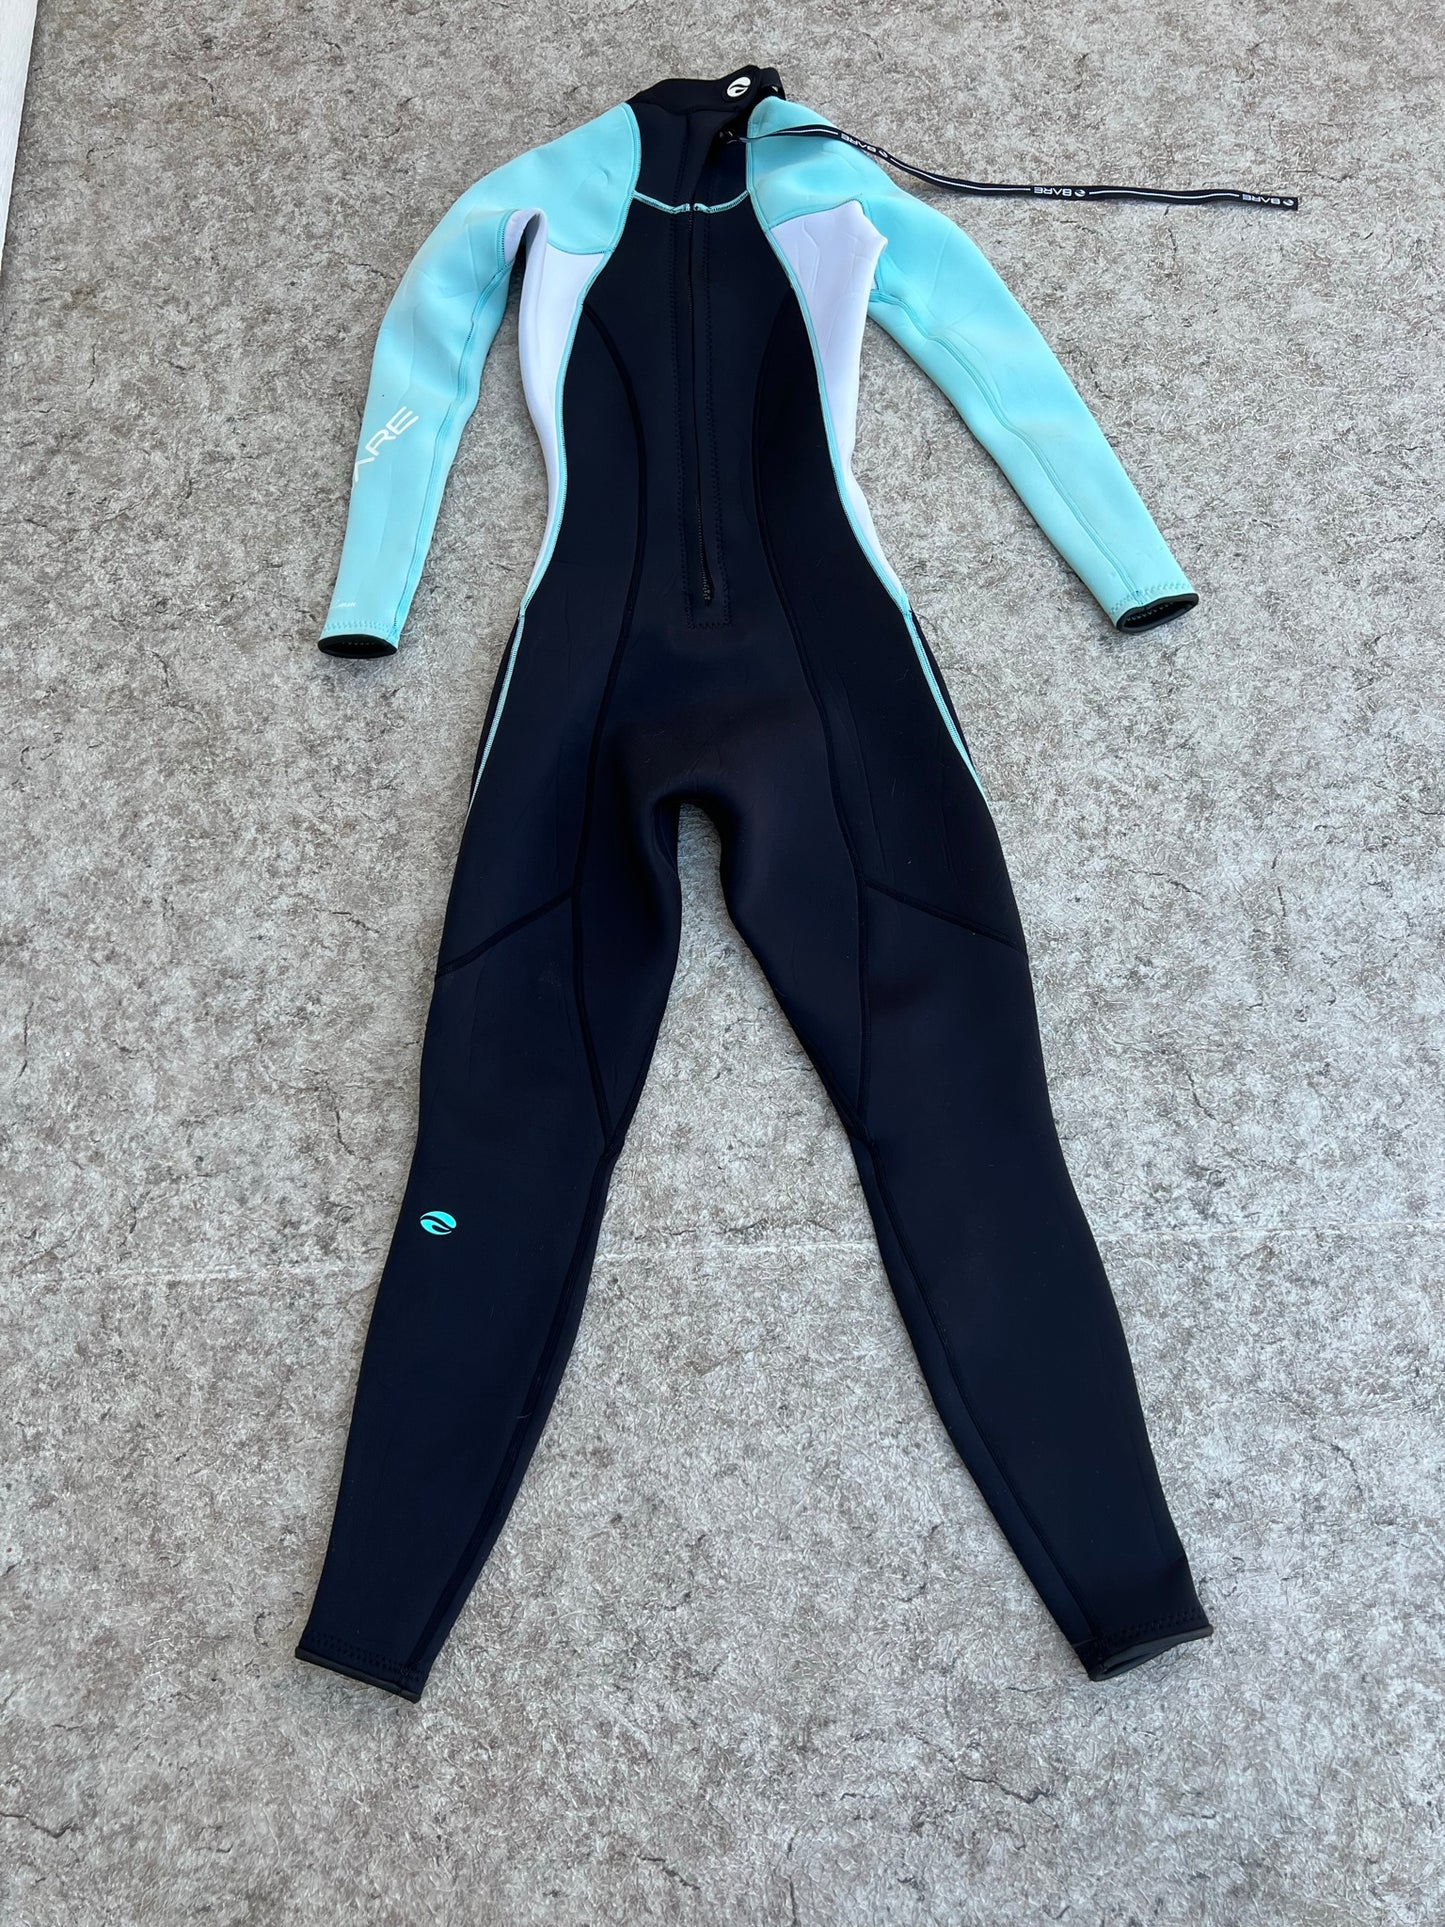 Wetsuit Child Size 14-16 Youth Aqua Blue Black Bare Full 3-2 mm Neoprene  Outstanding Quality Like New